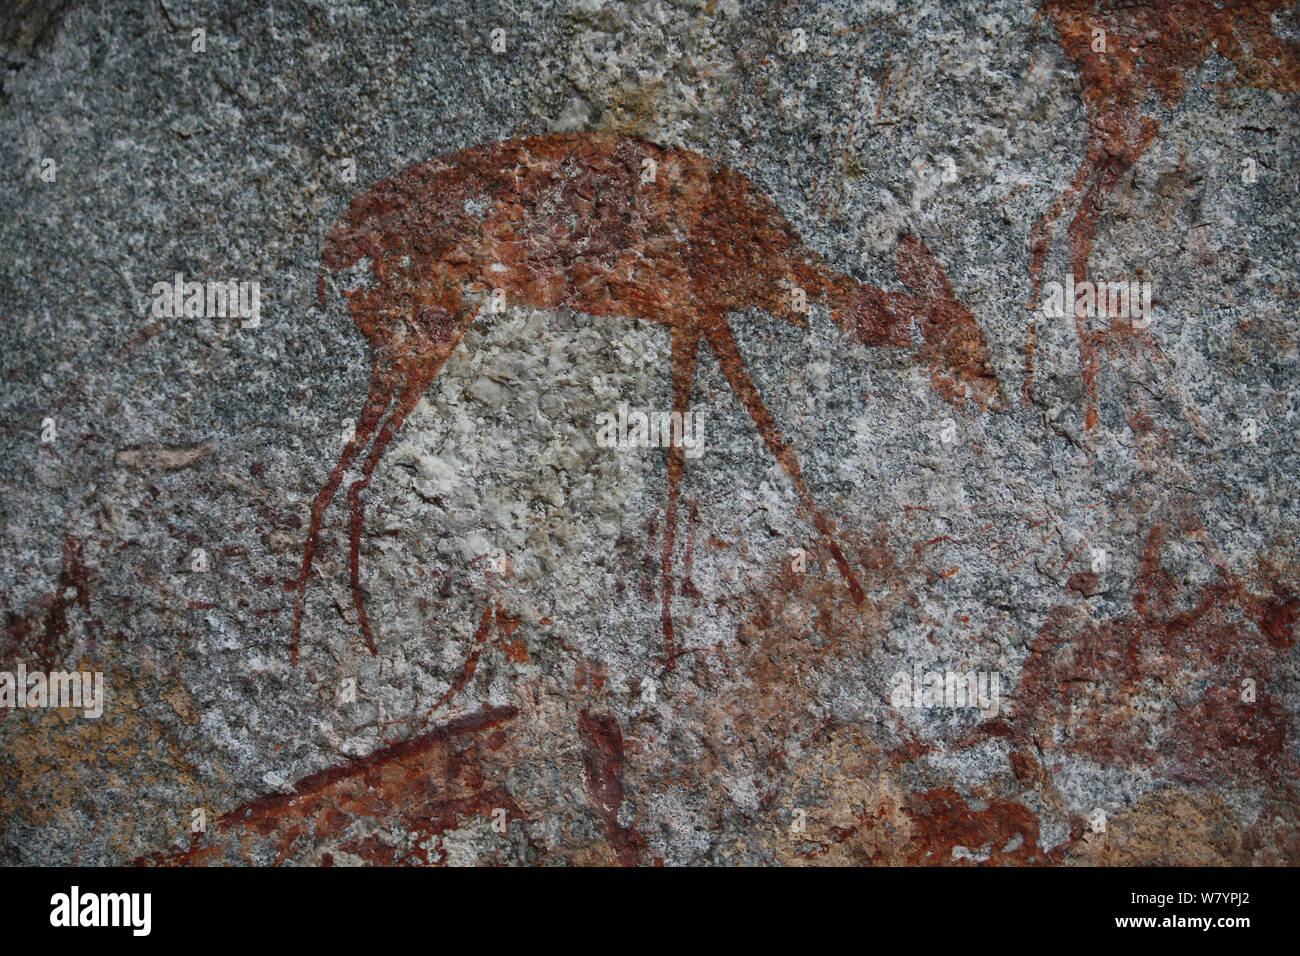 San rock painting of antelope, Matobo Hills, Zimbabwe. January 2011. Stock Photo